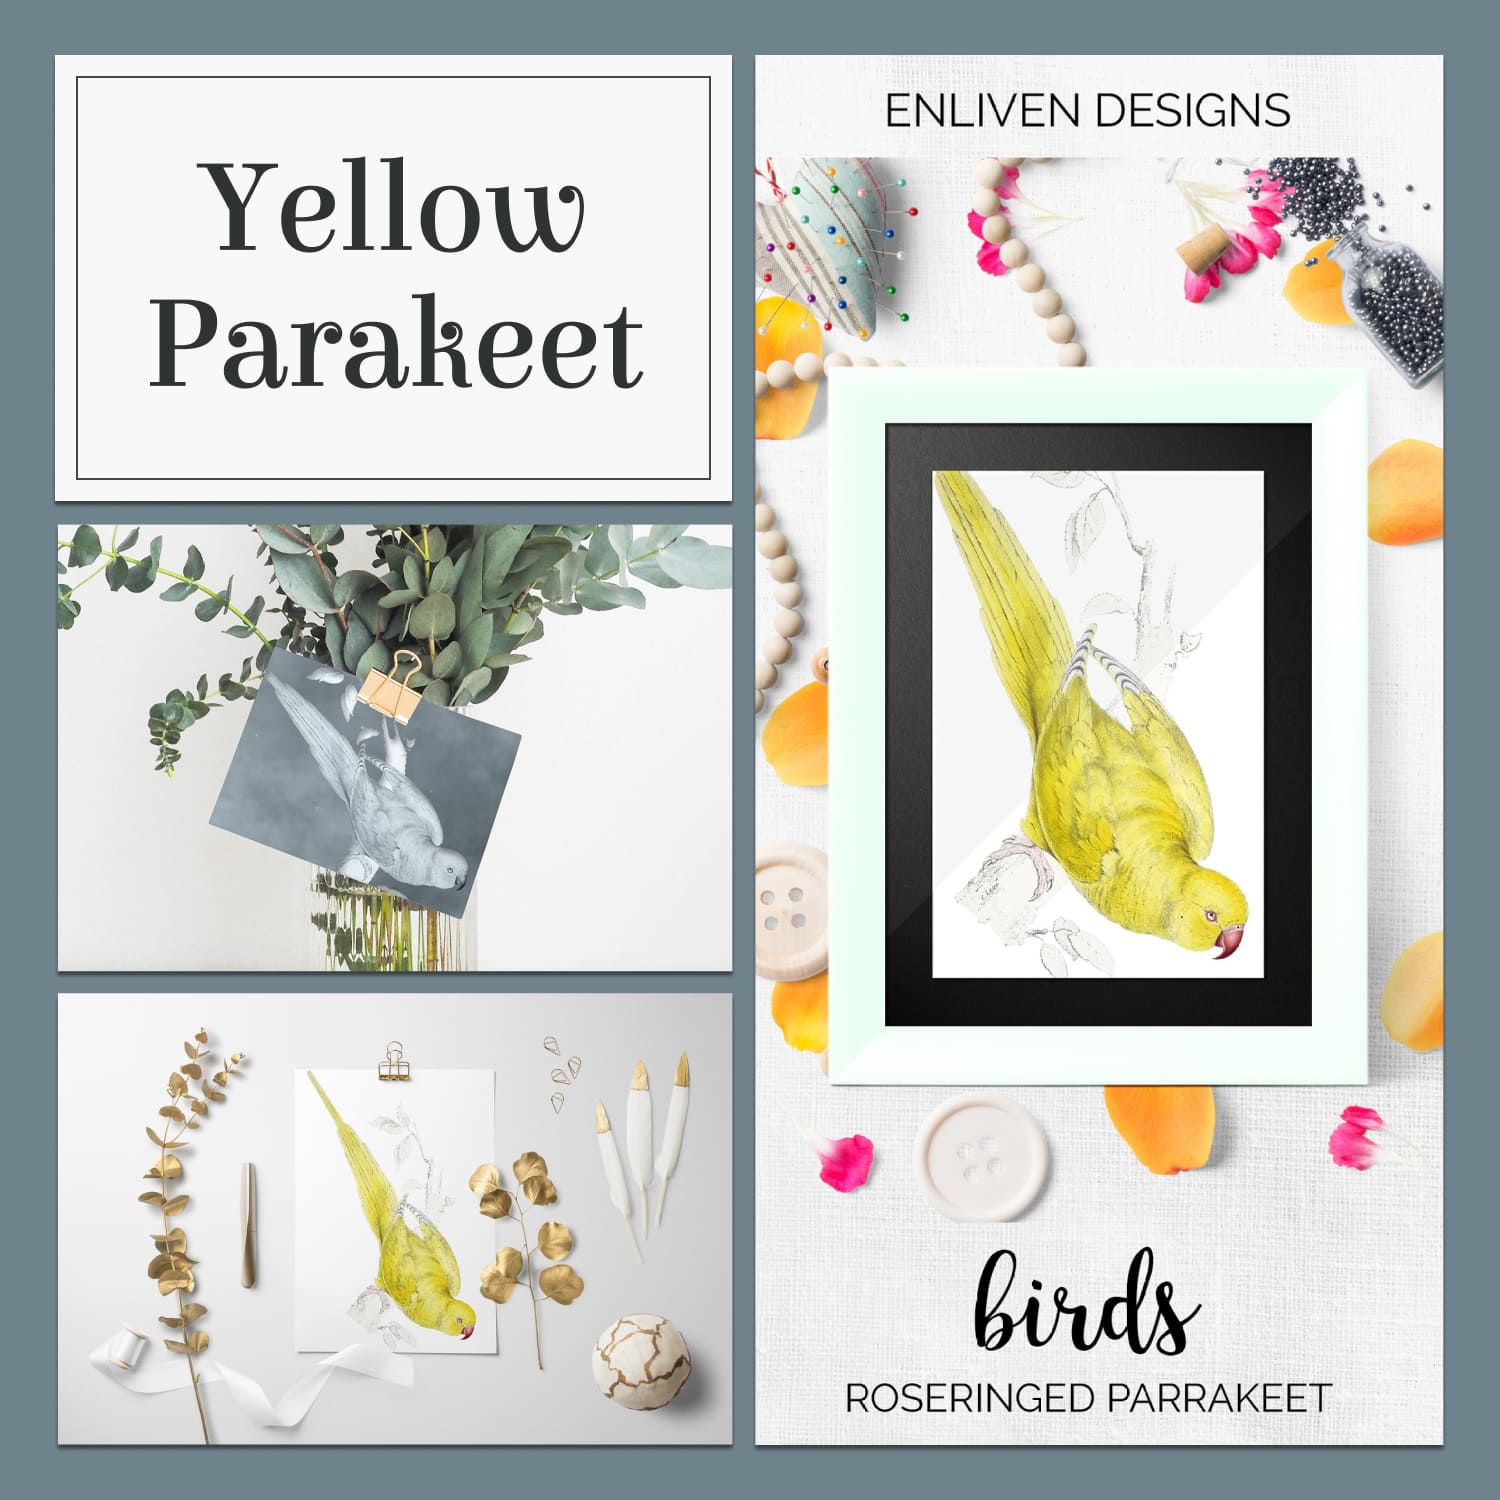 Parrot Yellow Parakeet - main image preview.